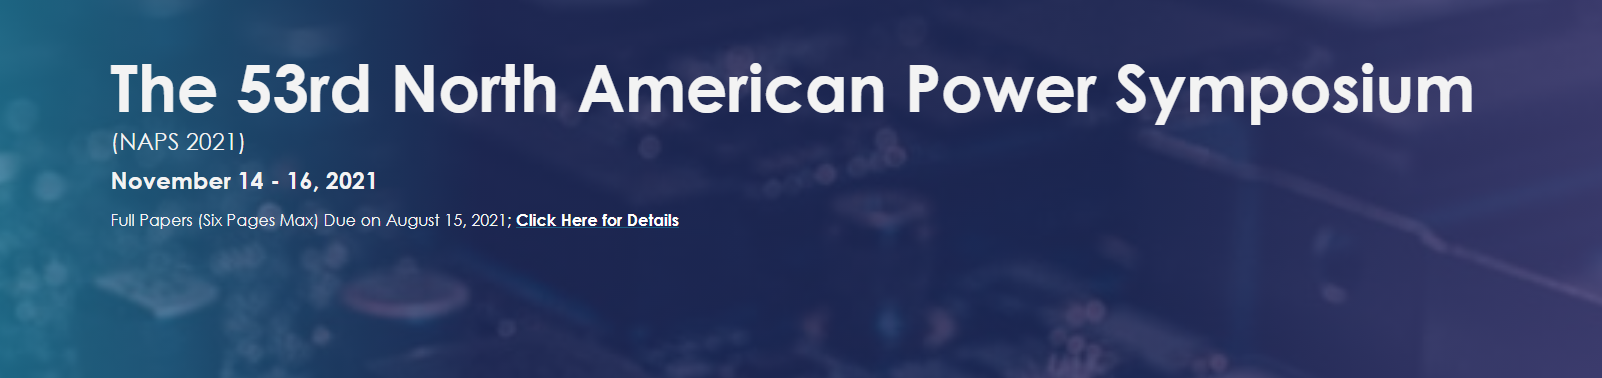 53rd North American Power Symposium